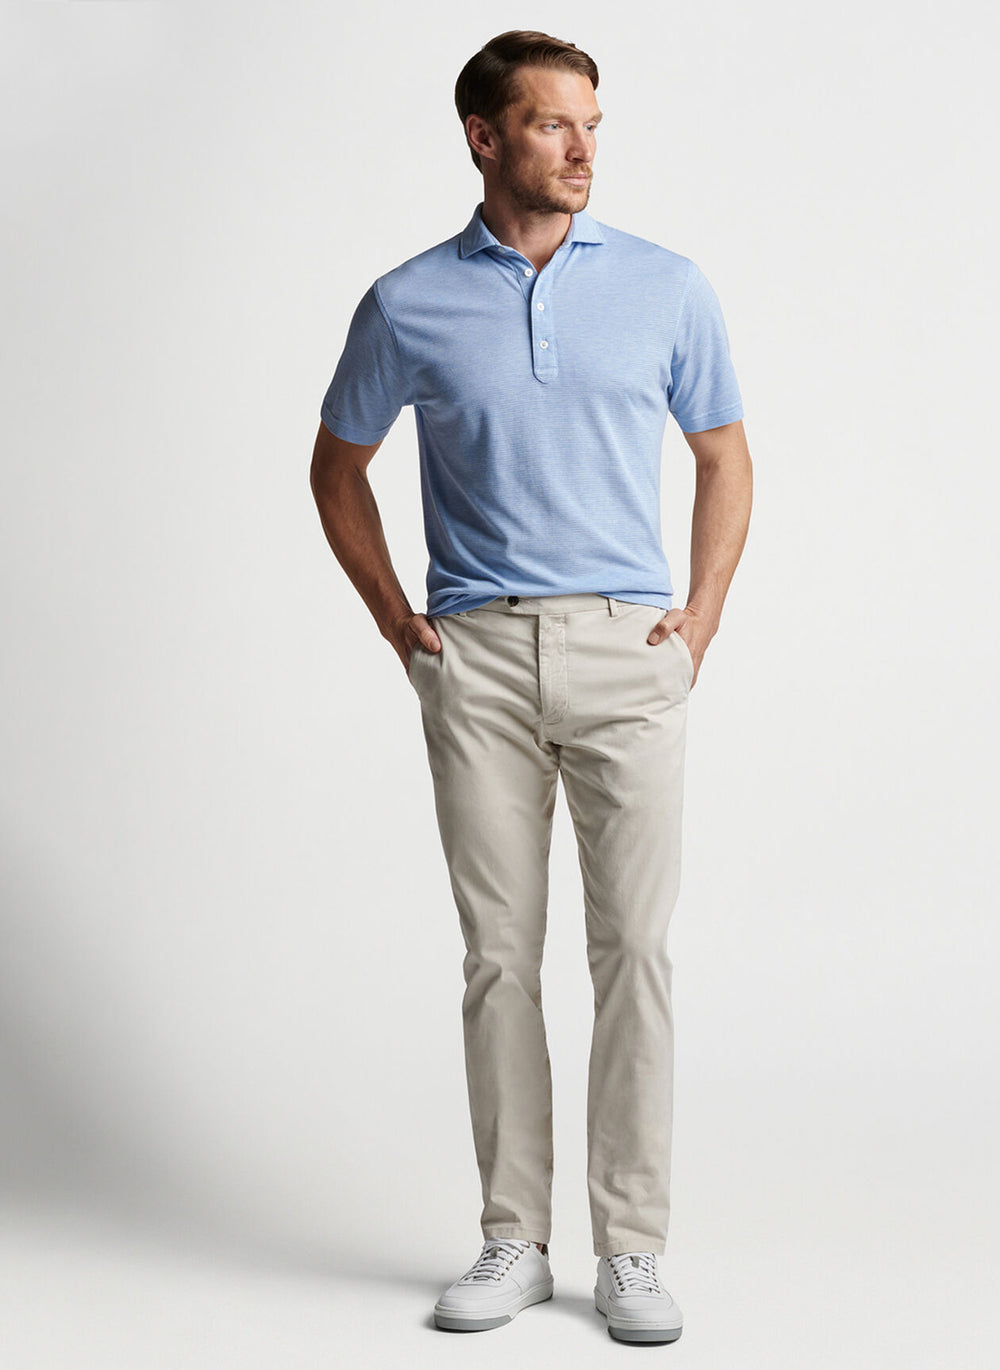 Peter Millar Sutton Cotton-Silk Short Sleeve Polo In Blue